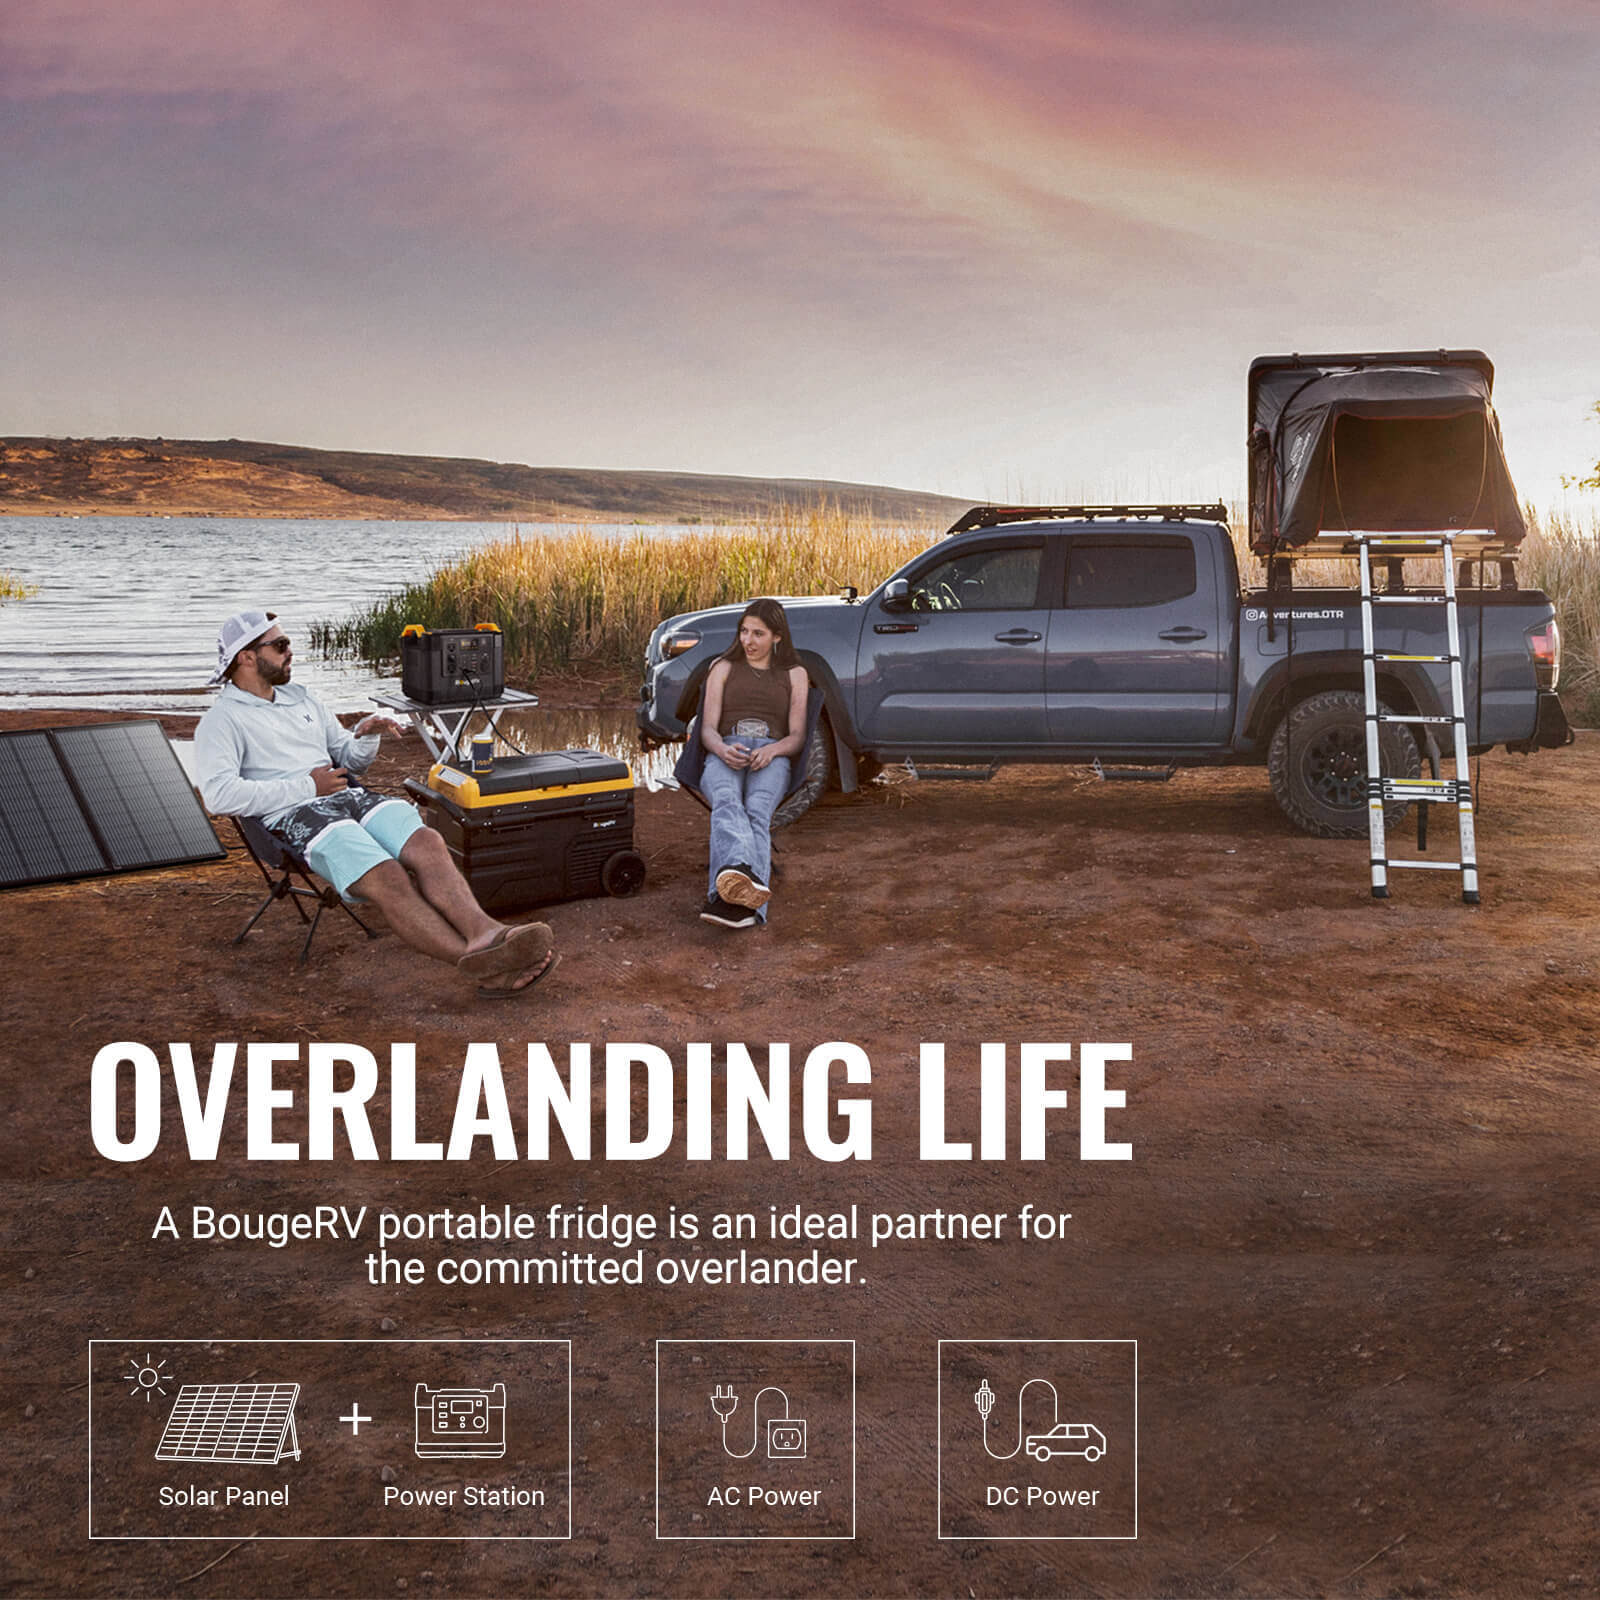 A Man And A Woman Enjoying Overlanding Life With BougeRV CR55 59 Quart (55L) Portable Fridge Freezer